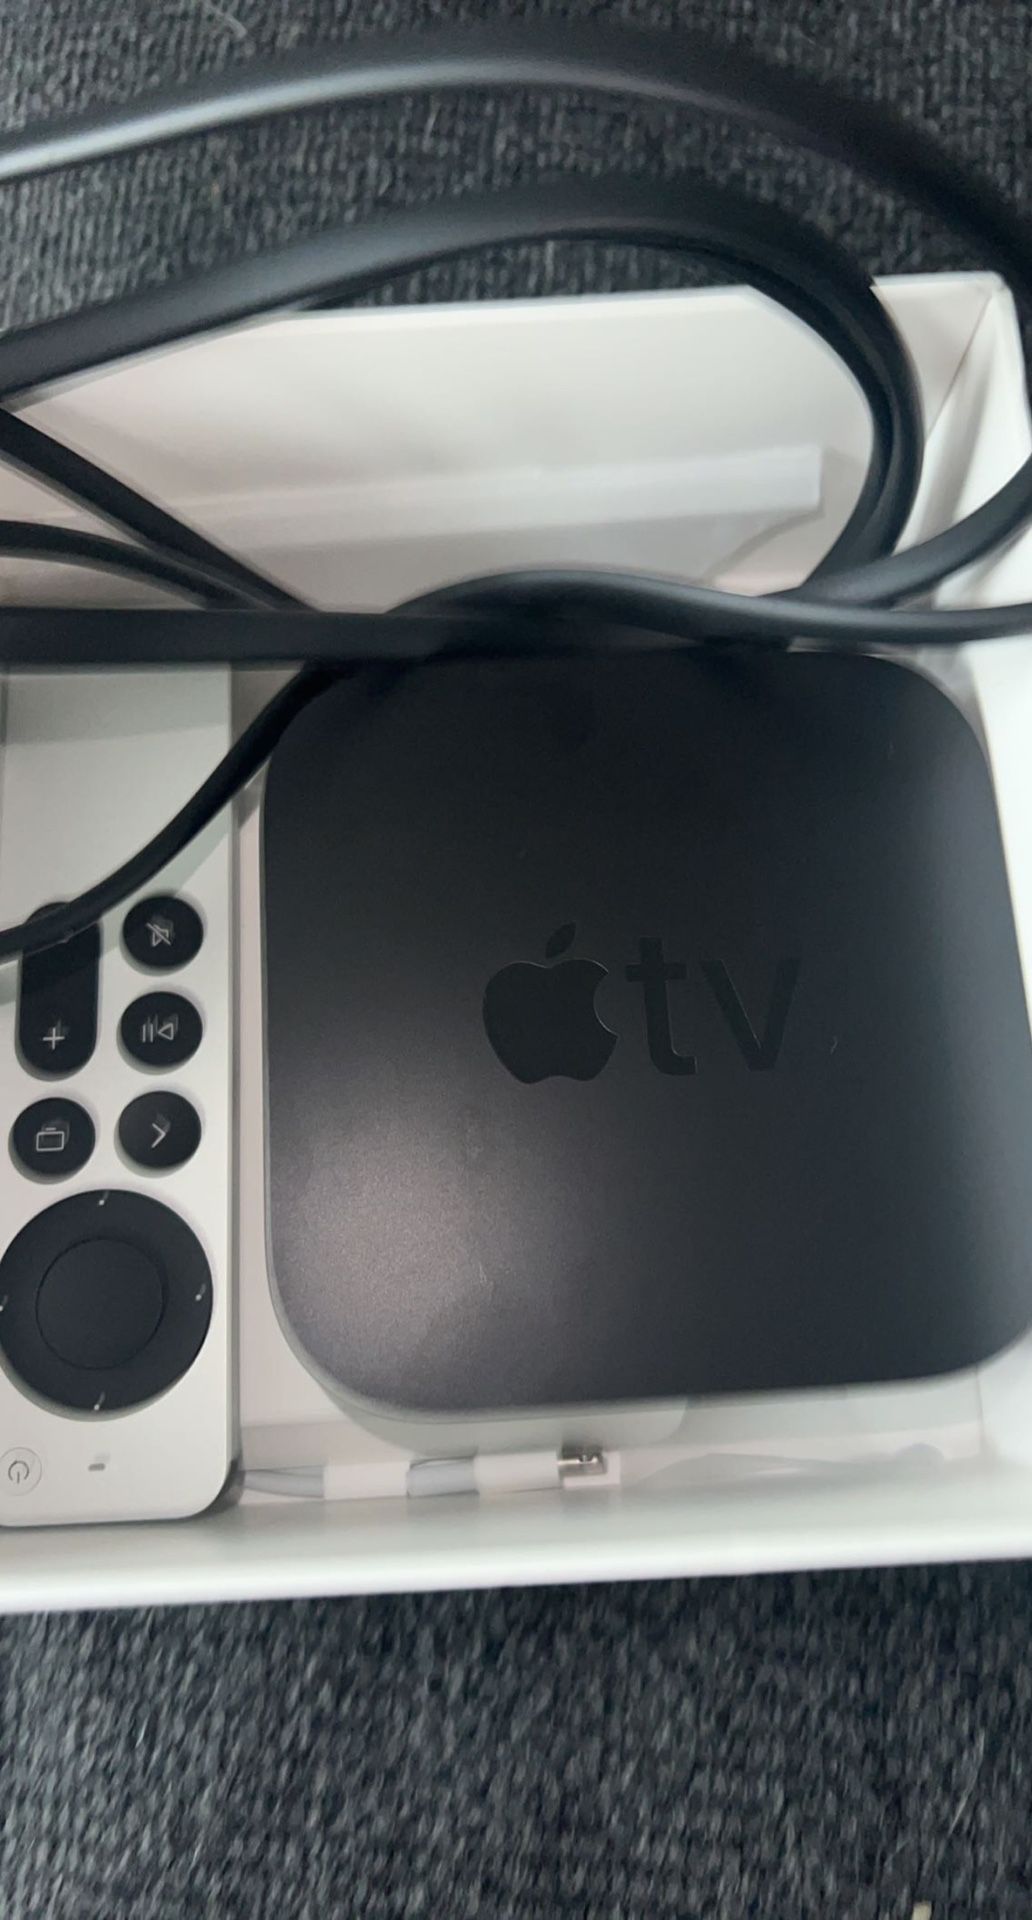 Apple TV Device 